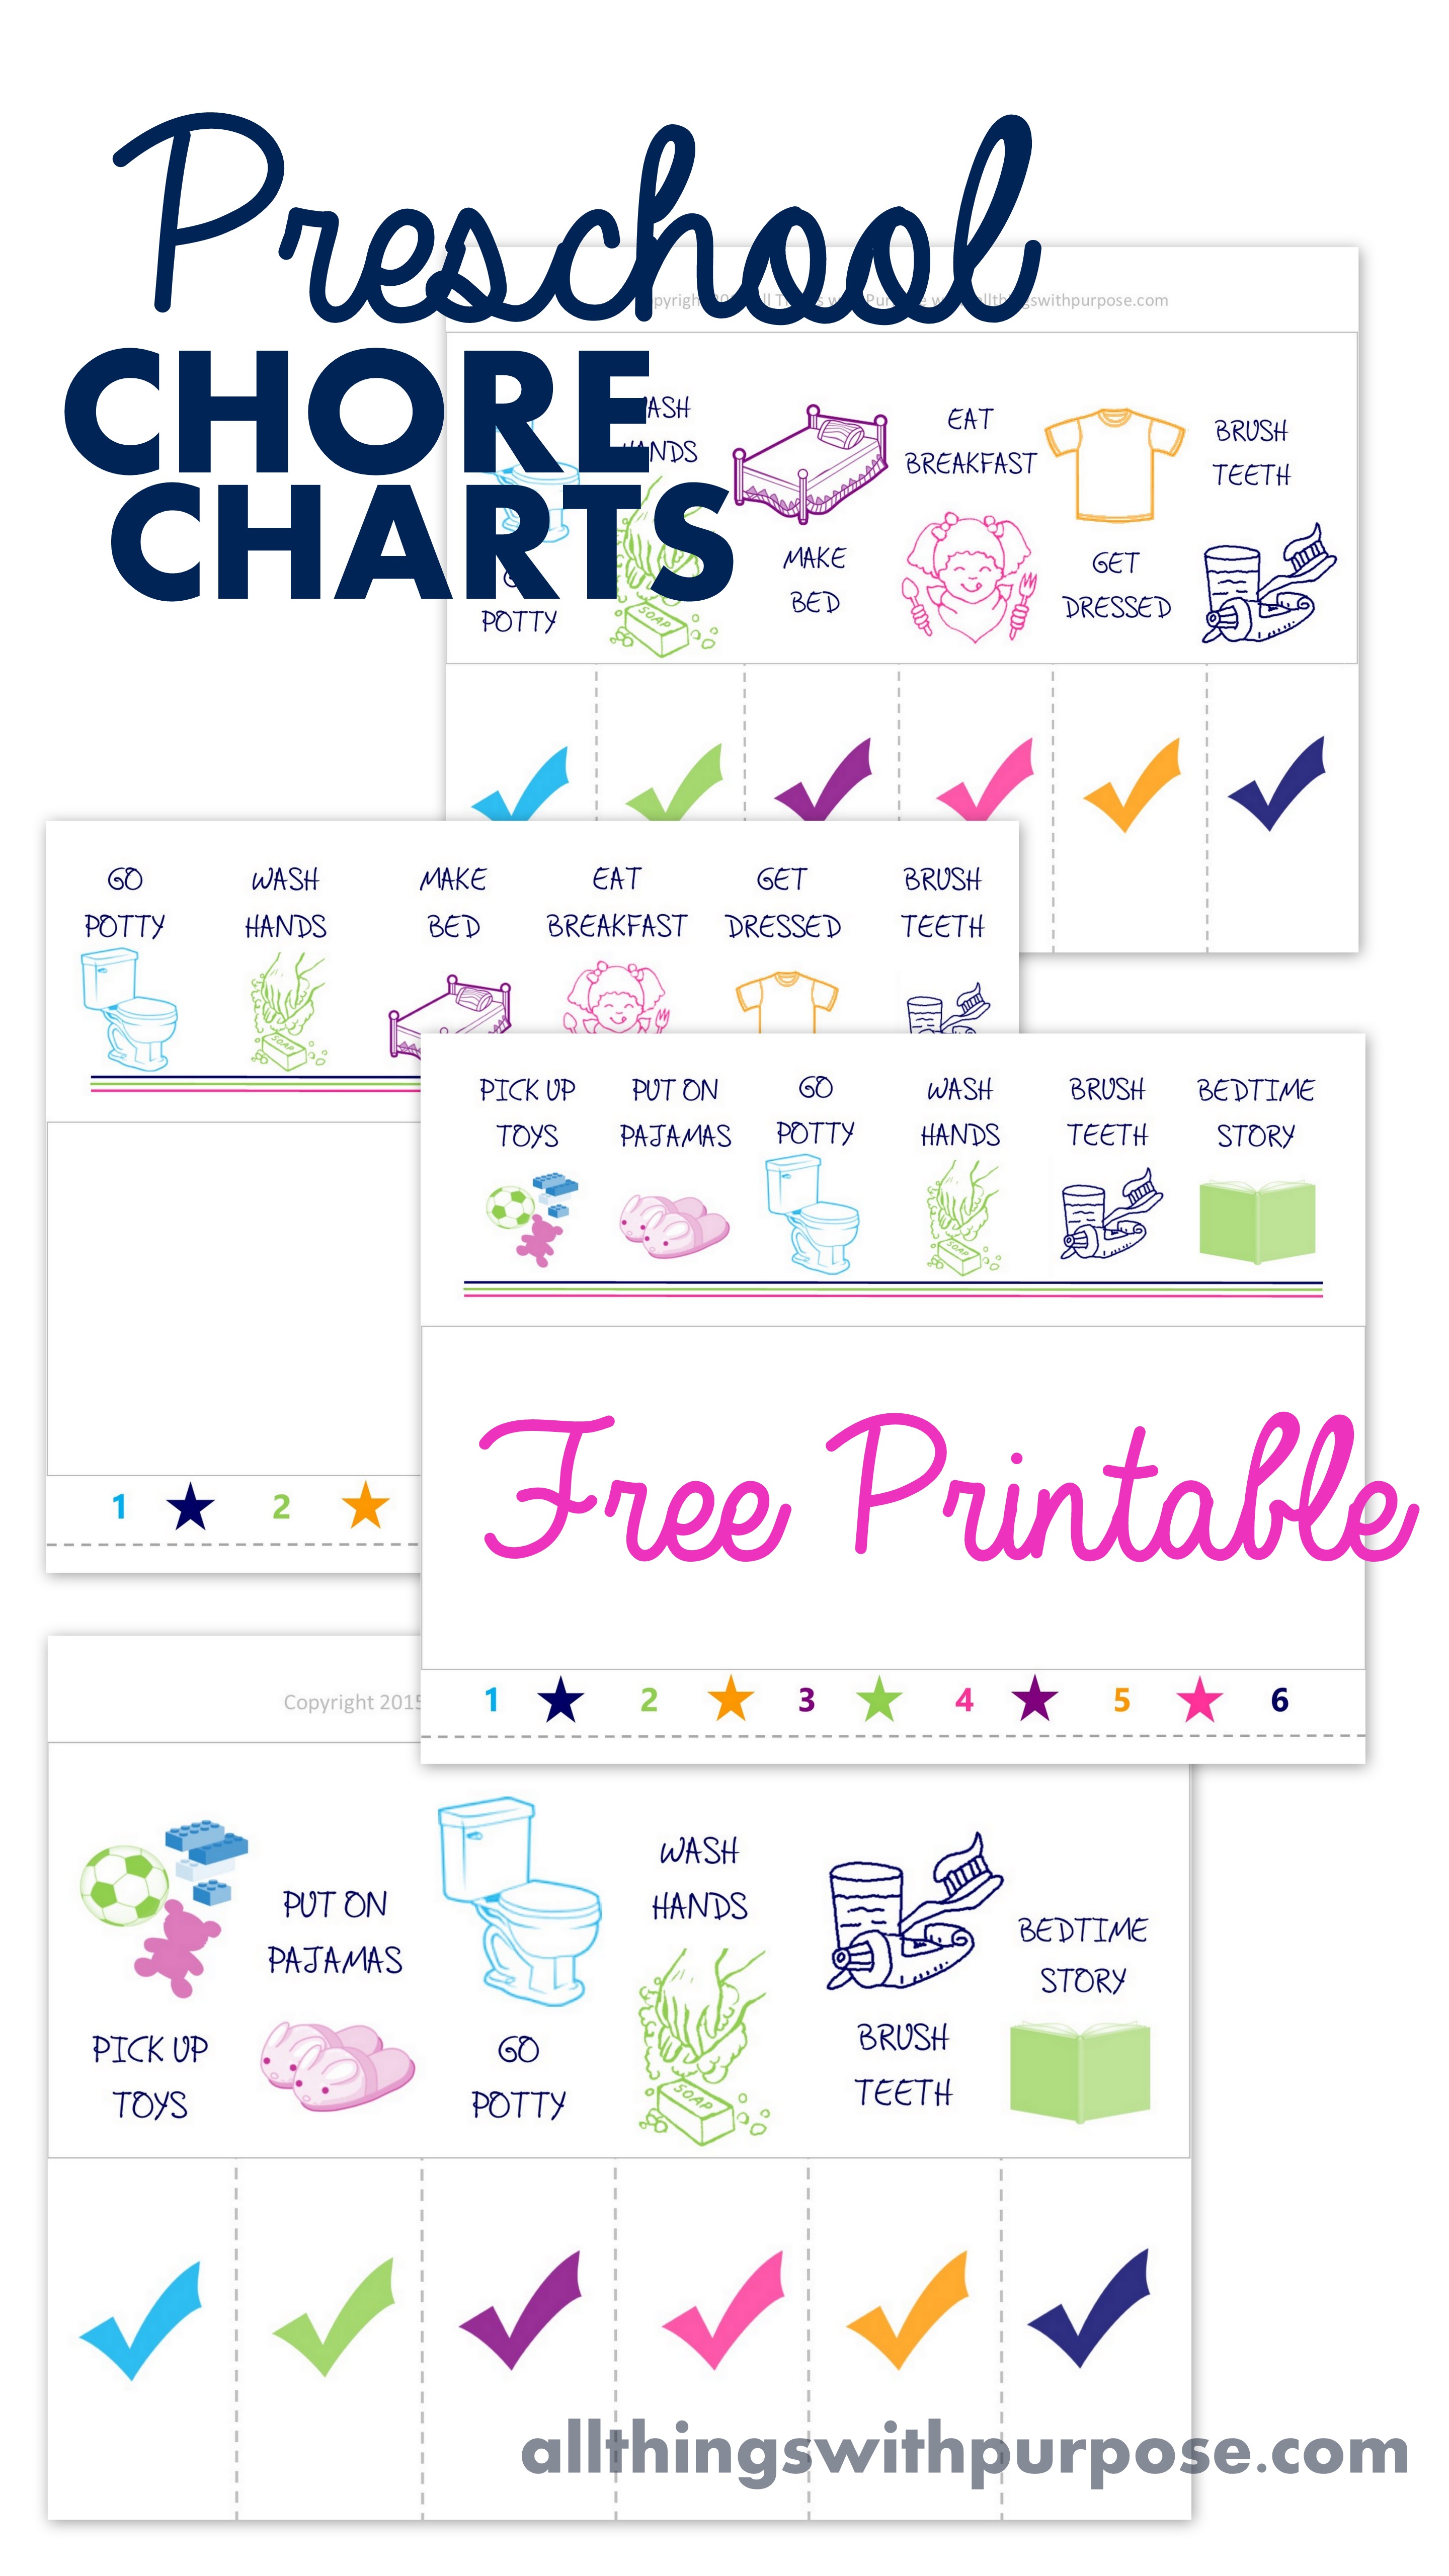 Free Printable Chore Chart For Preschoolers